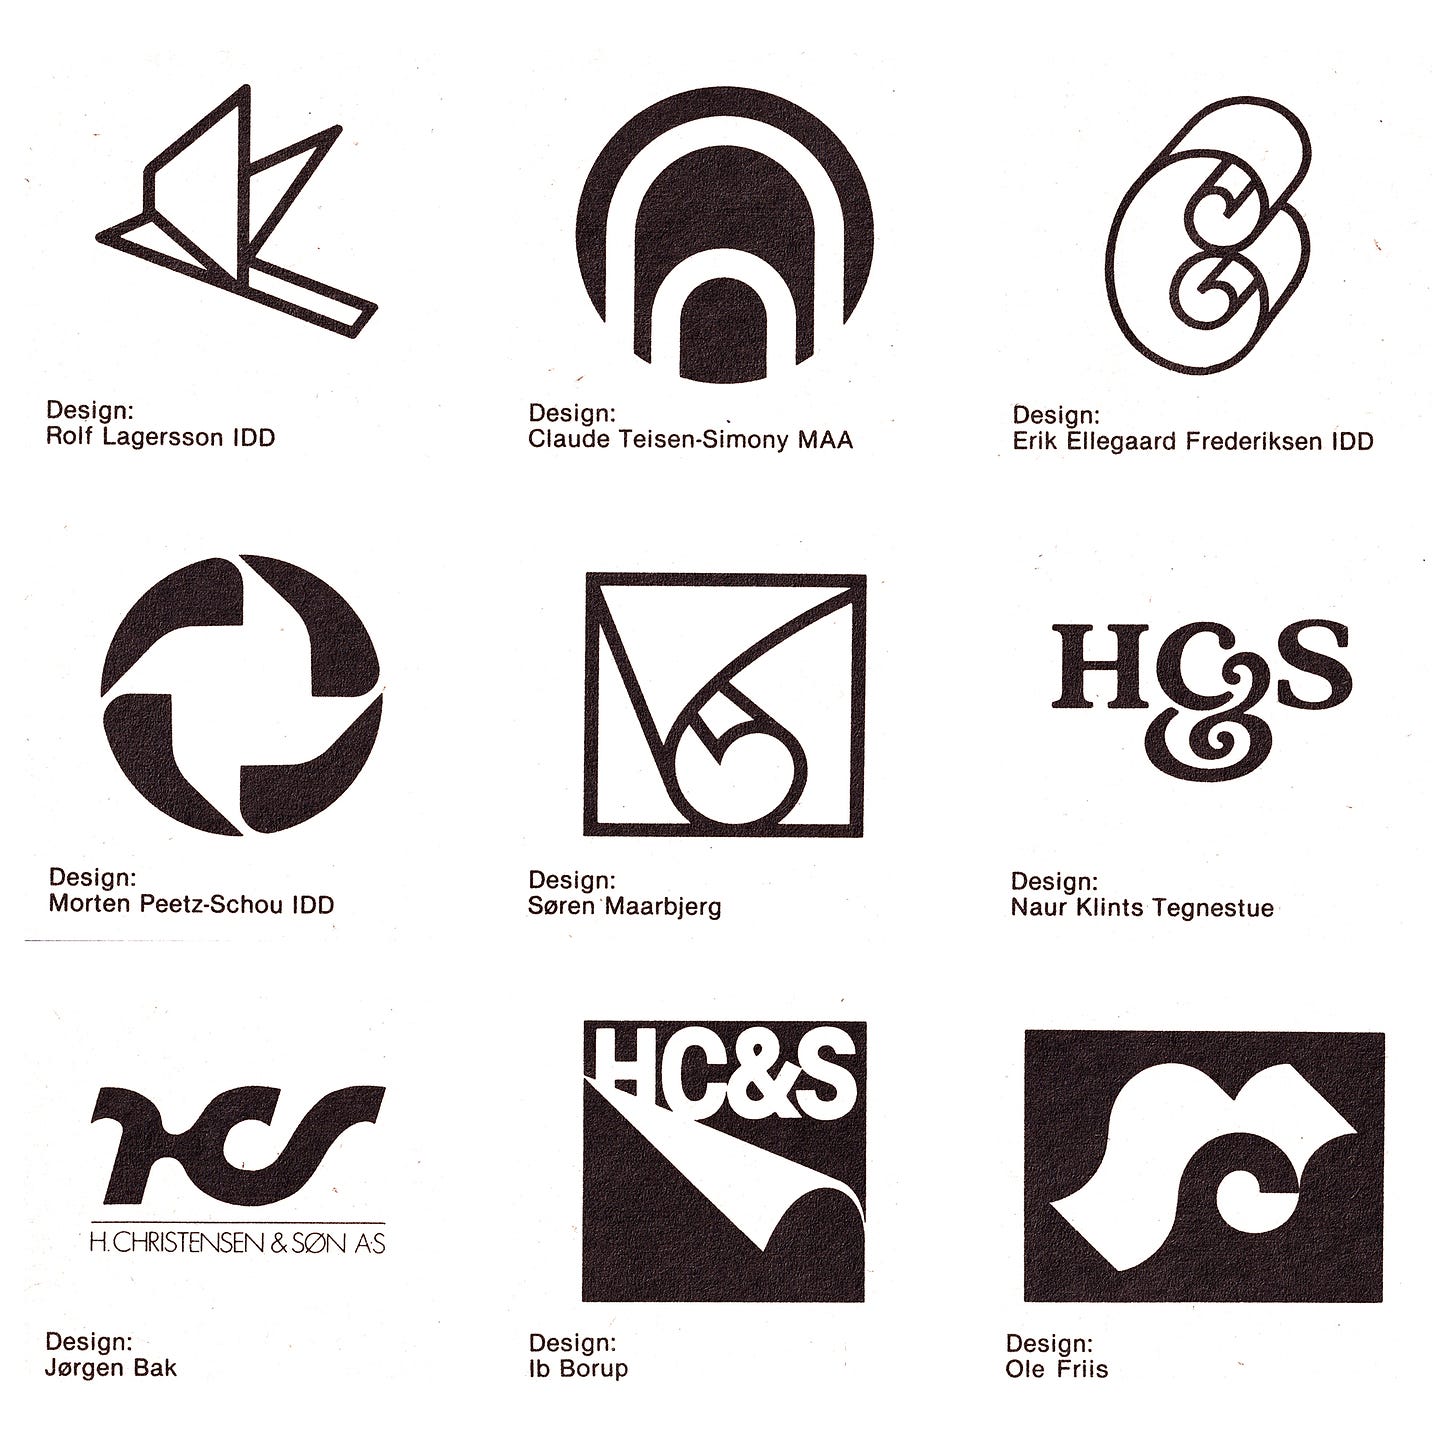 Ole Friis' 1980 logo for paper manufacturer H.Christensen & Søn